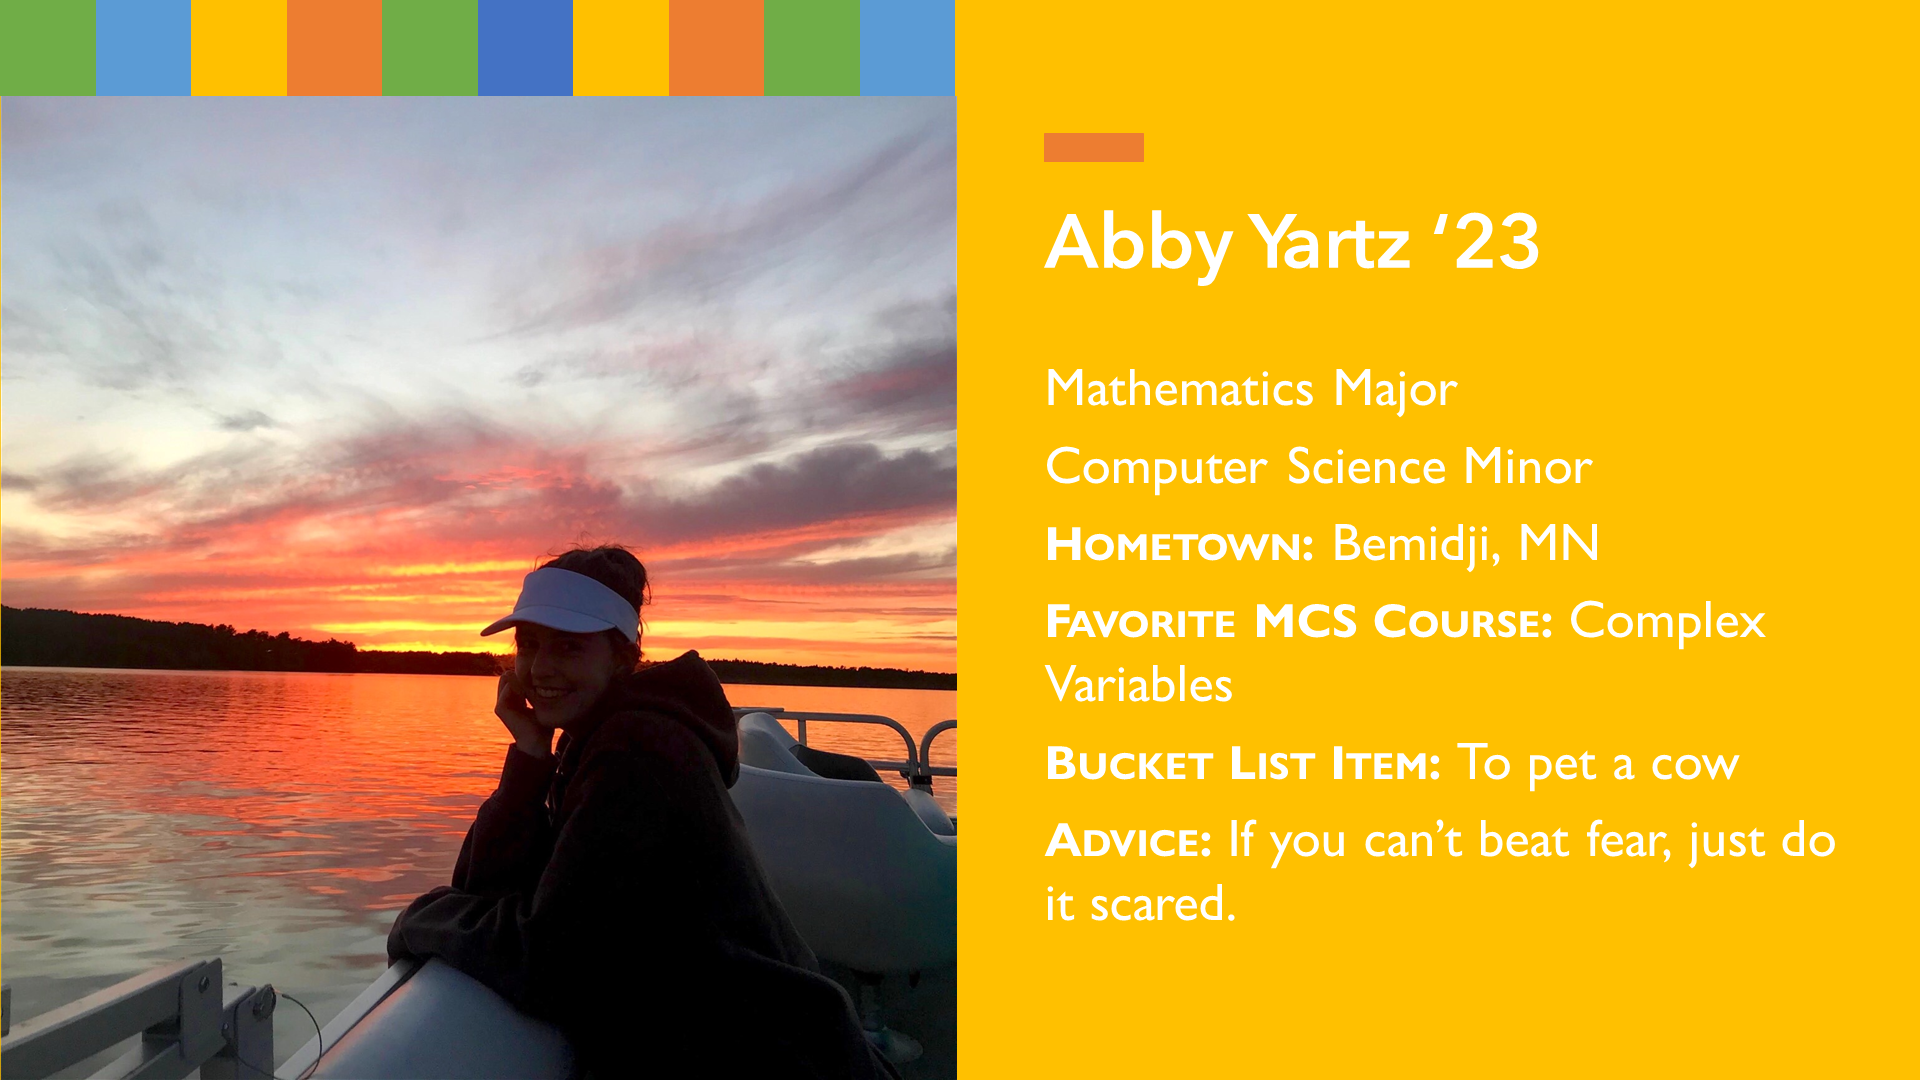 Abby Yartz